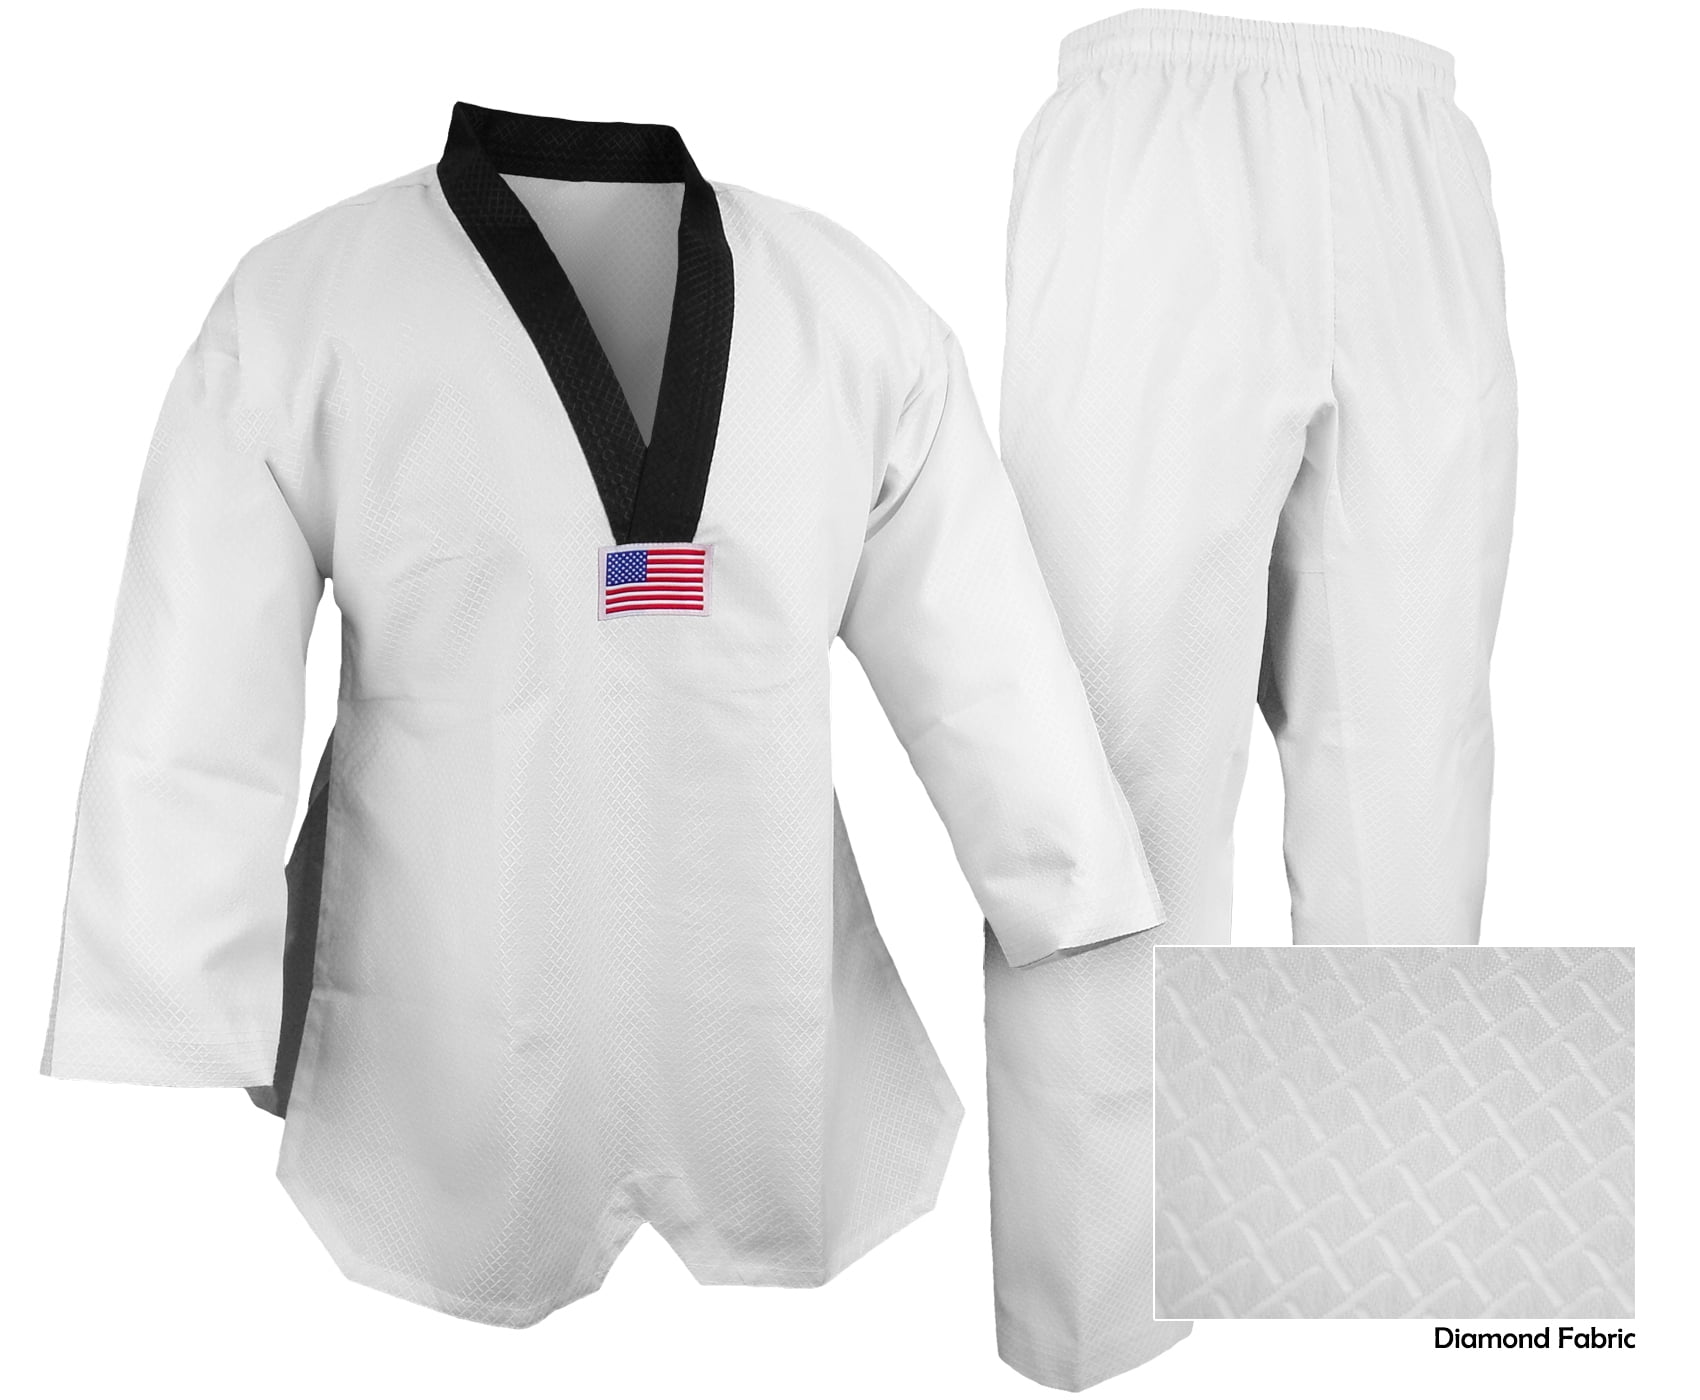 Details about   New V-Neck Taekwondo Deluxe Jaquard Diamond Fabric Gi Uniform White w Black Trim 